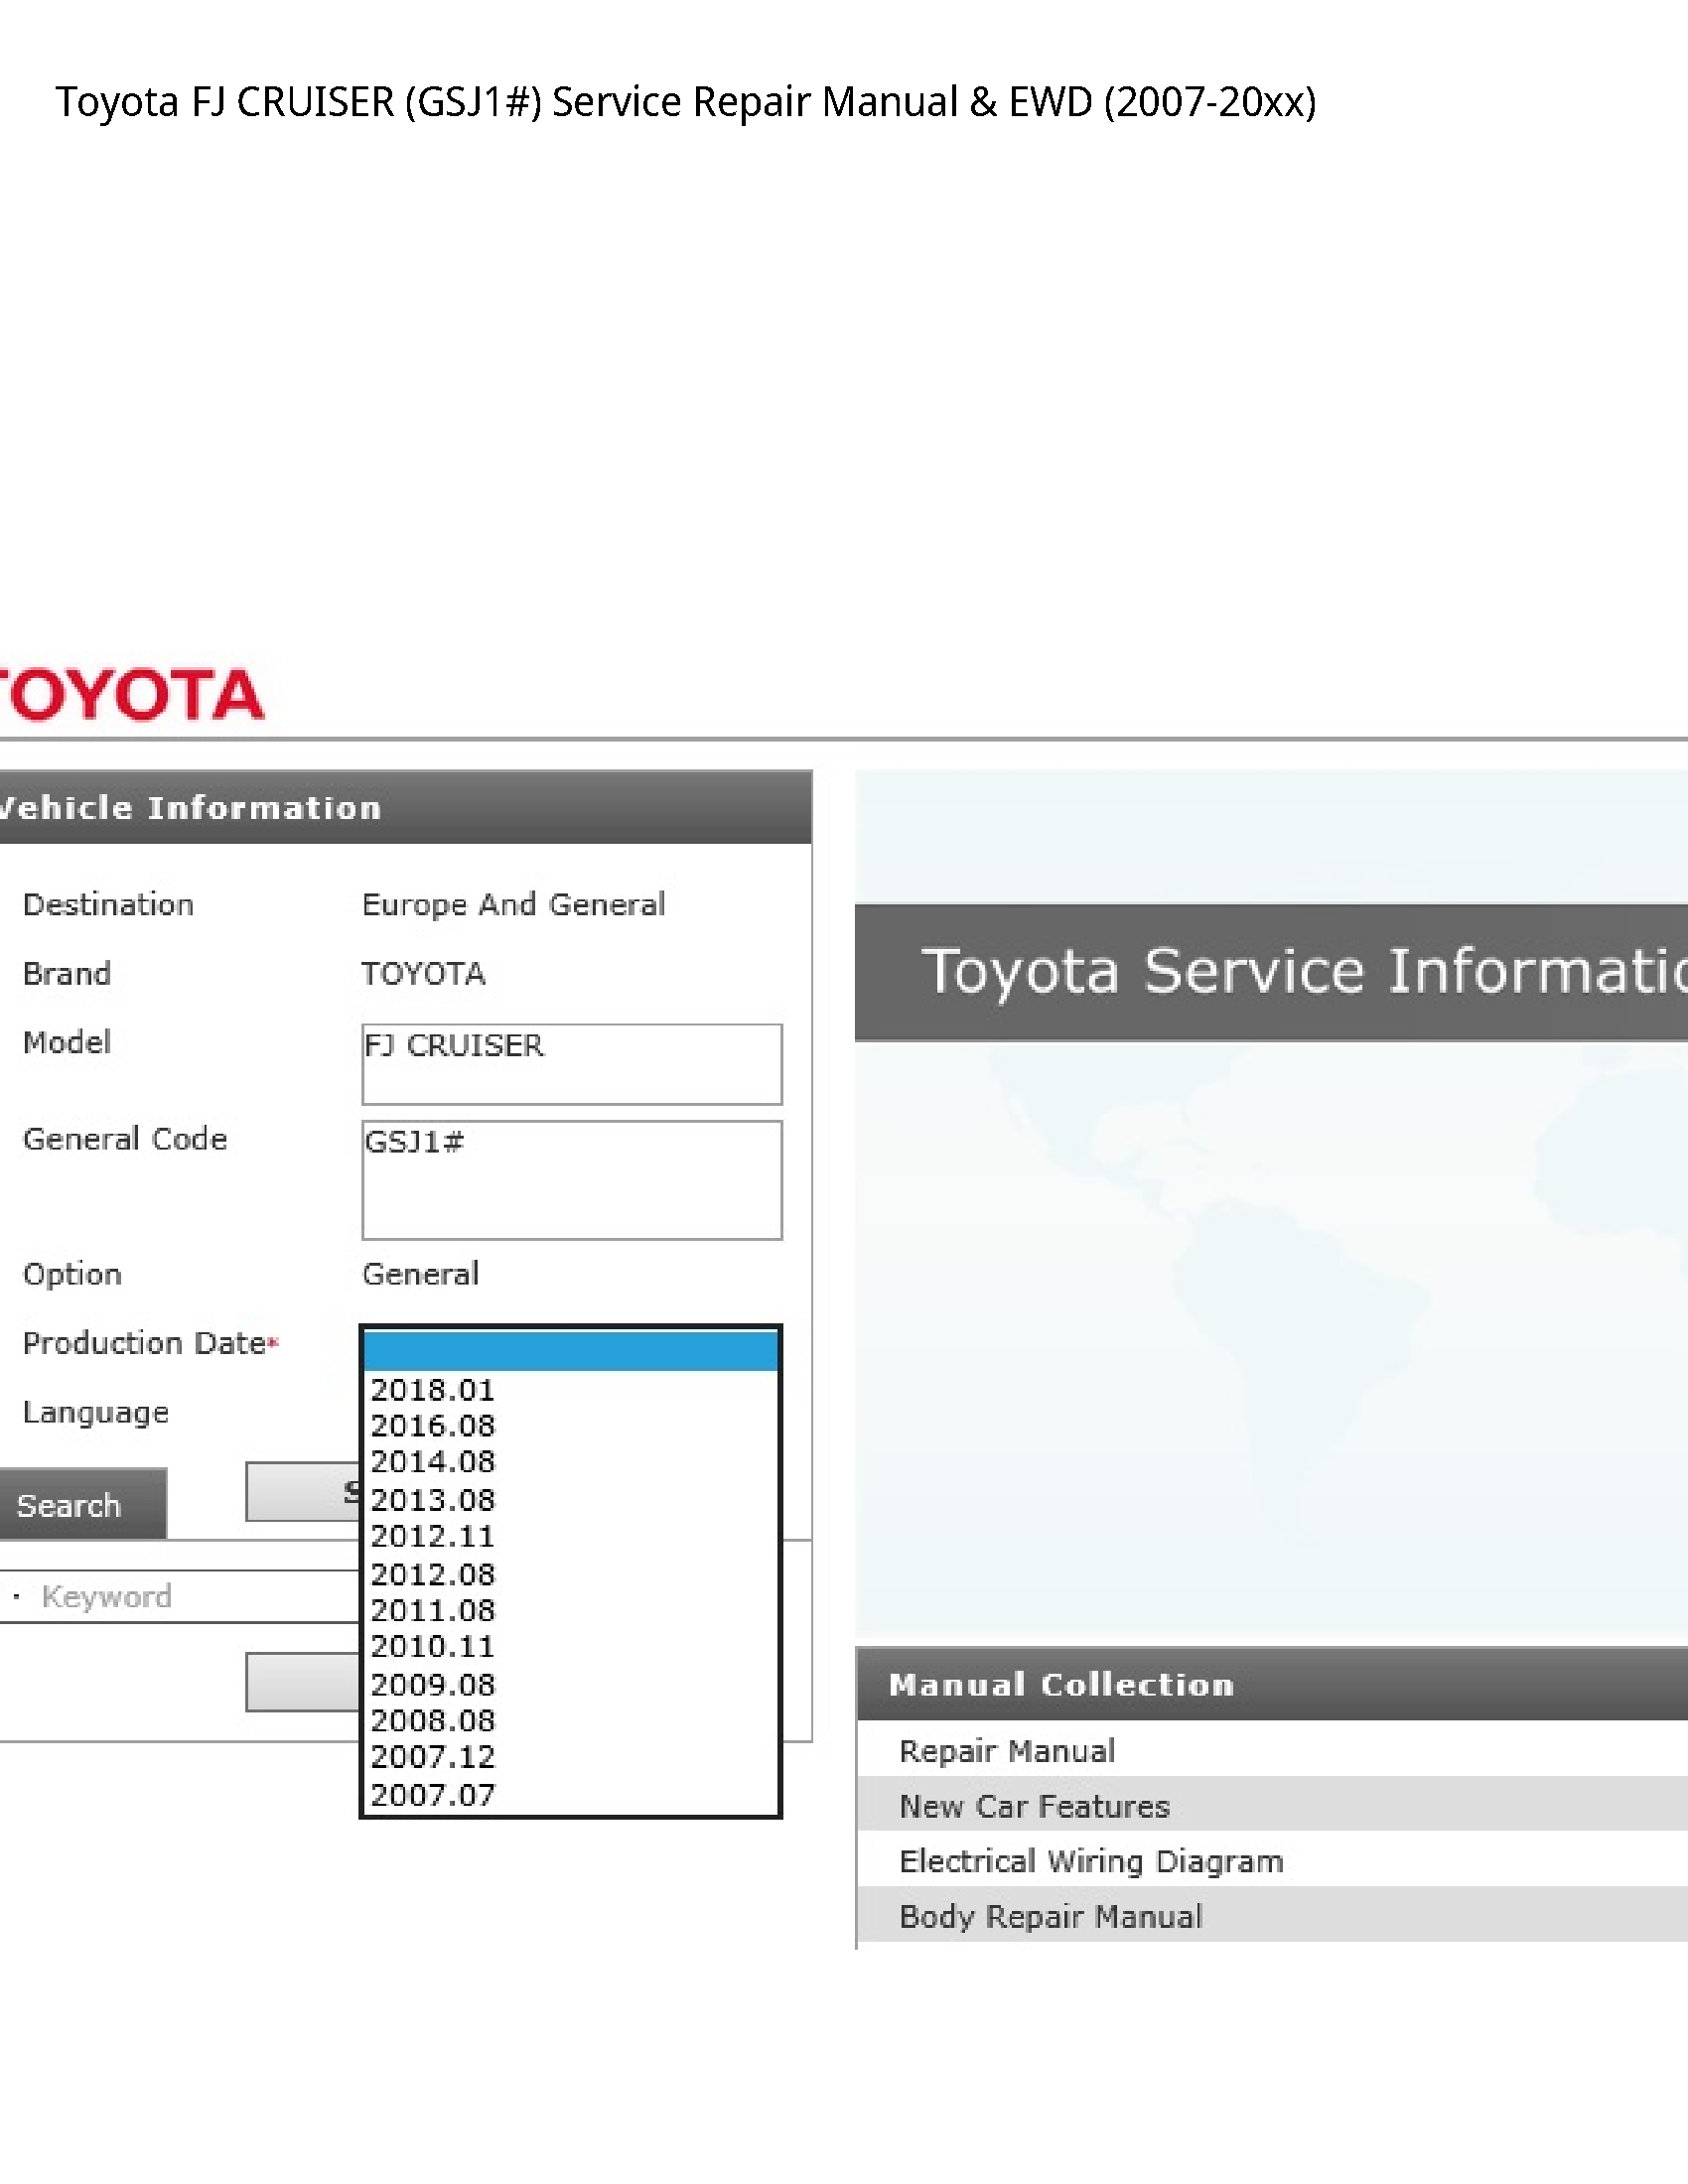 Toyota (GSJ1#) FJ CRUISER manual